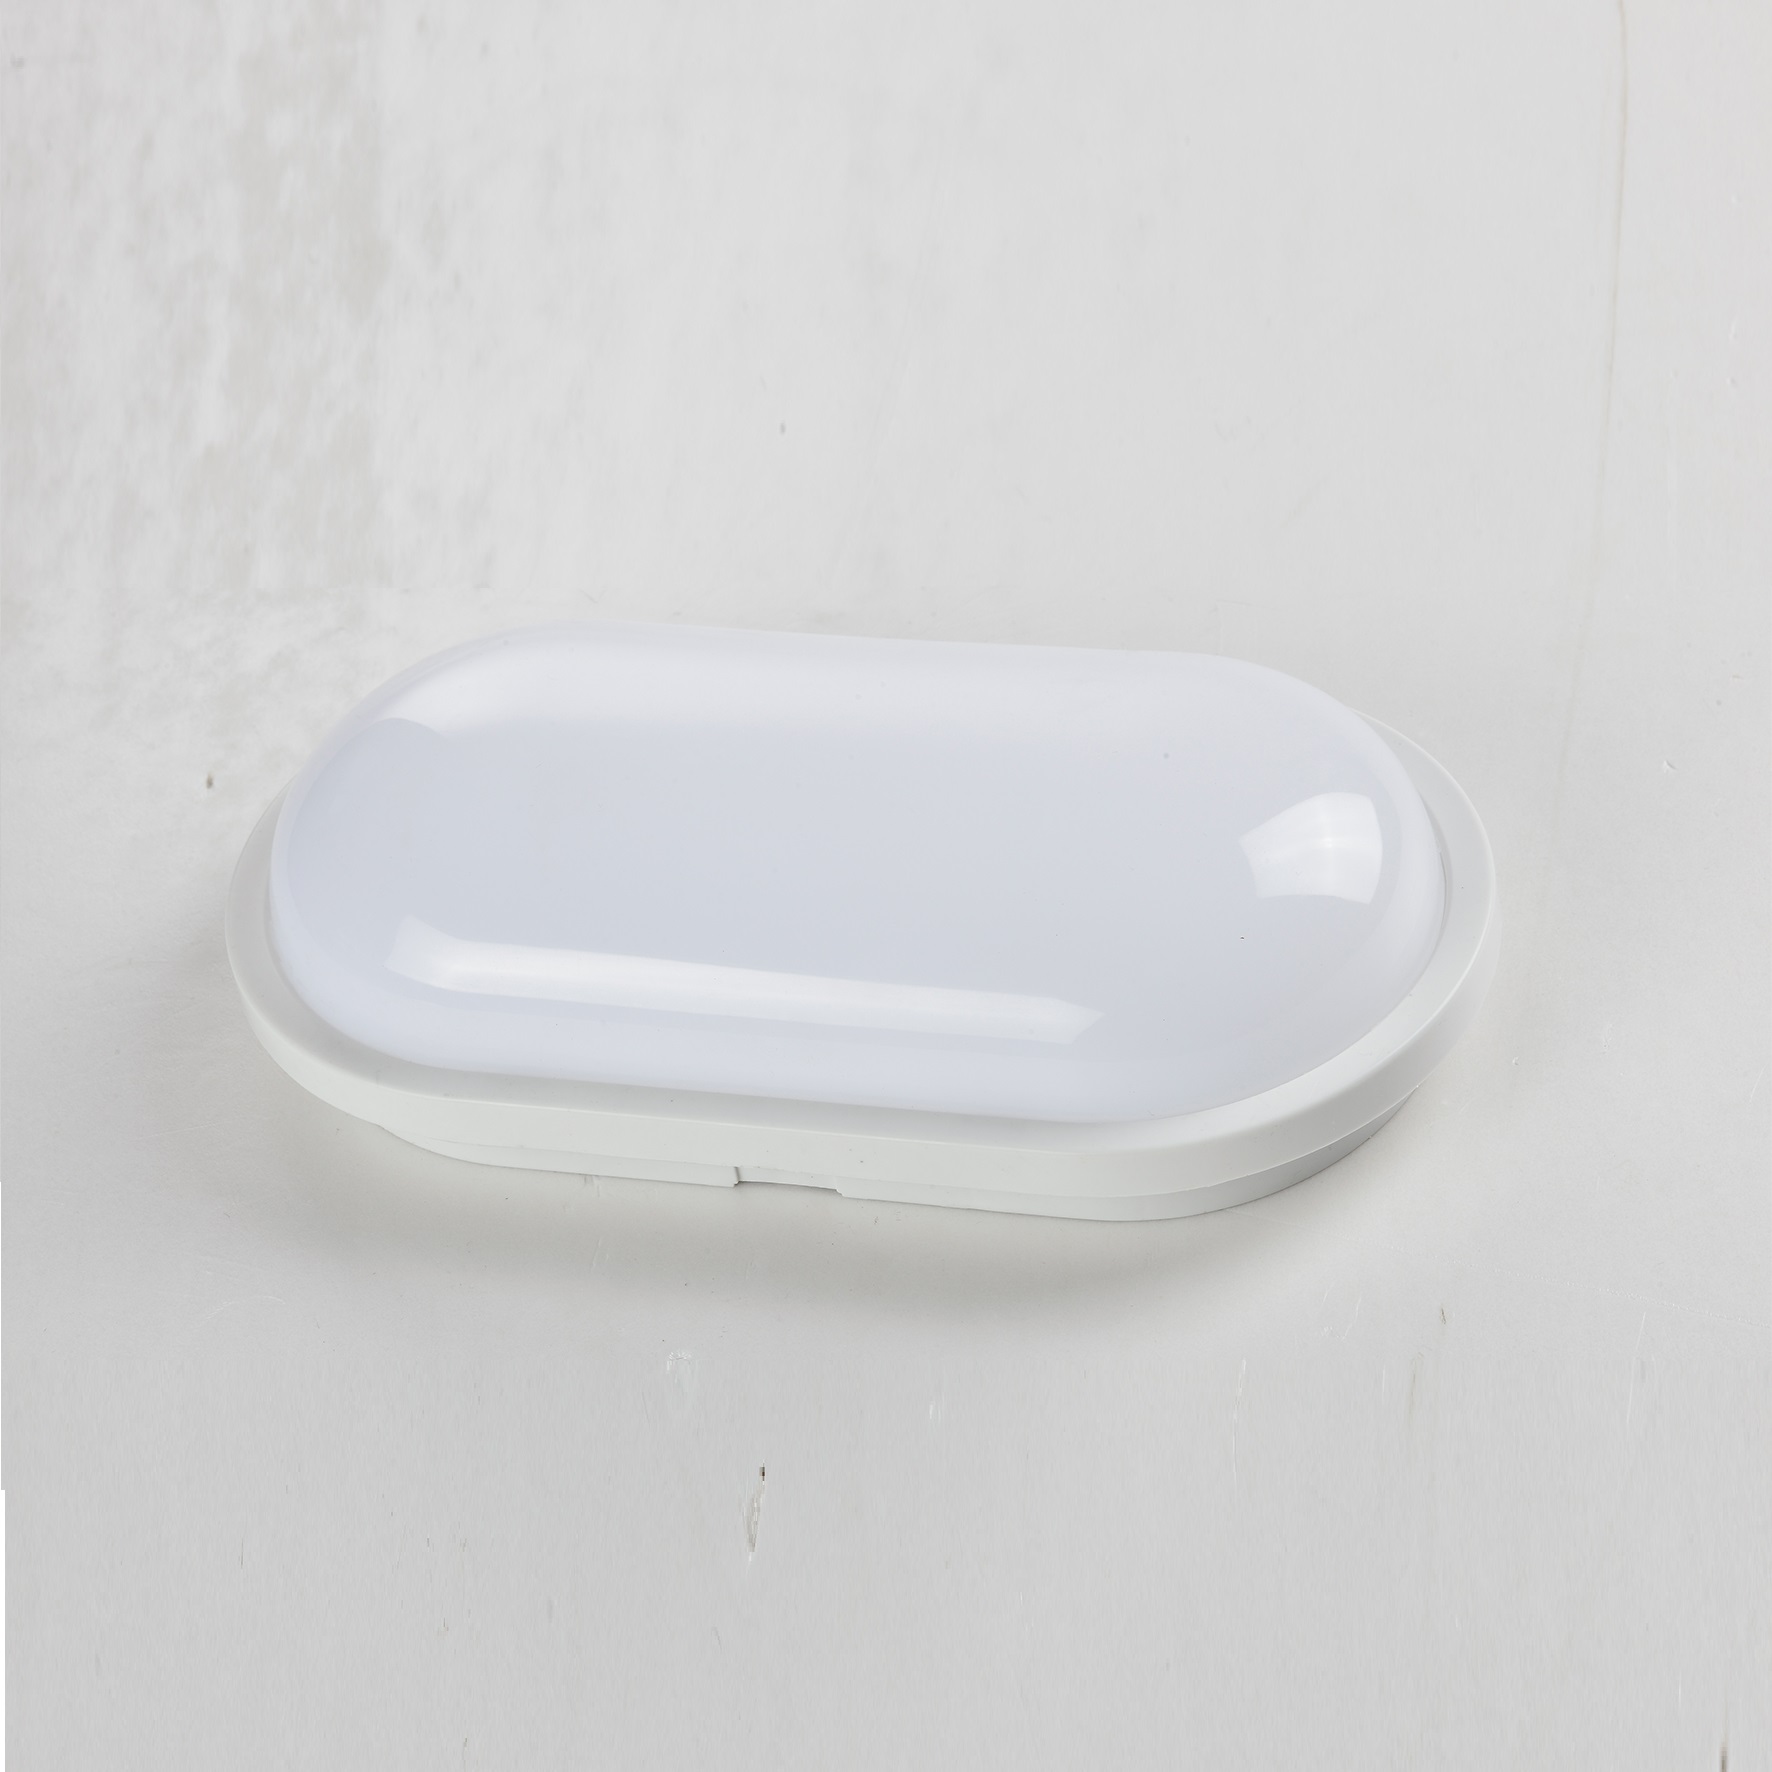 Anti-fog bathroom light Outdoor waterproof LED wall light